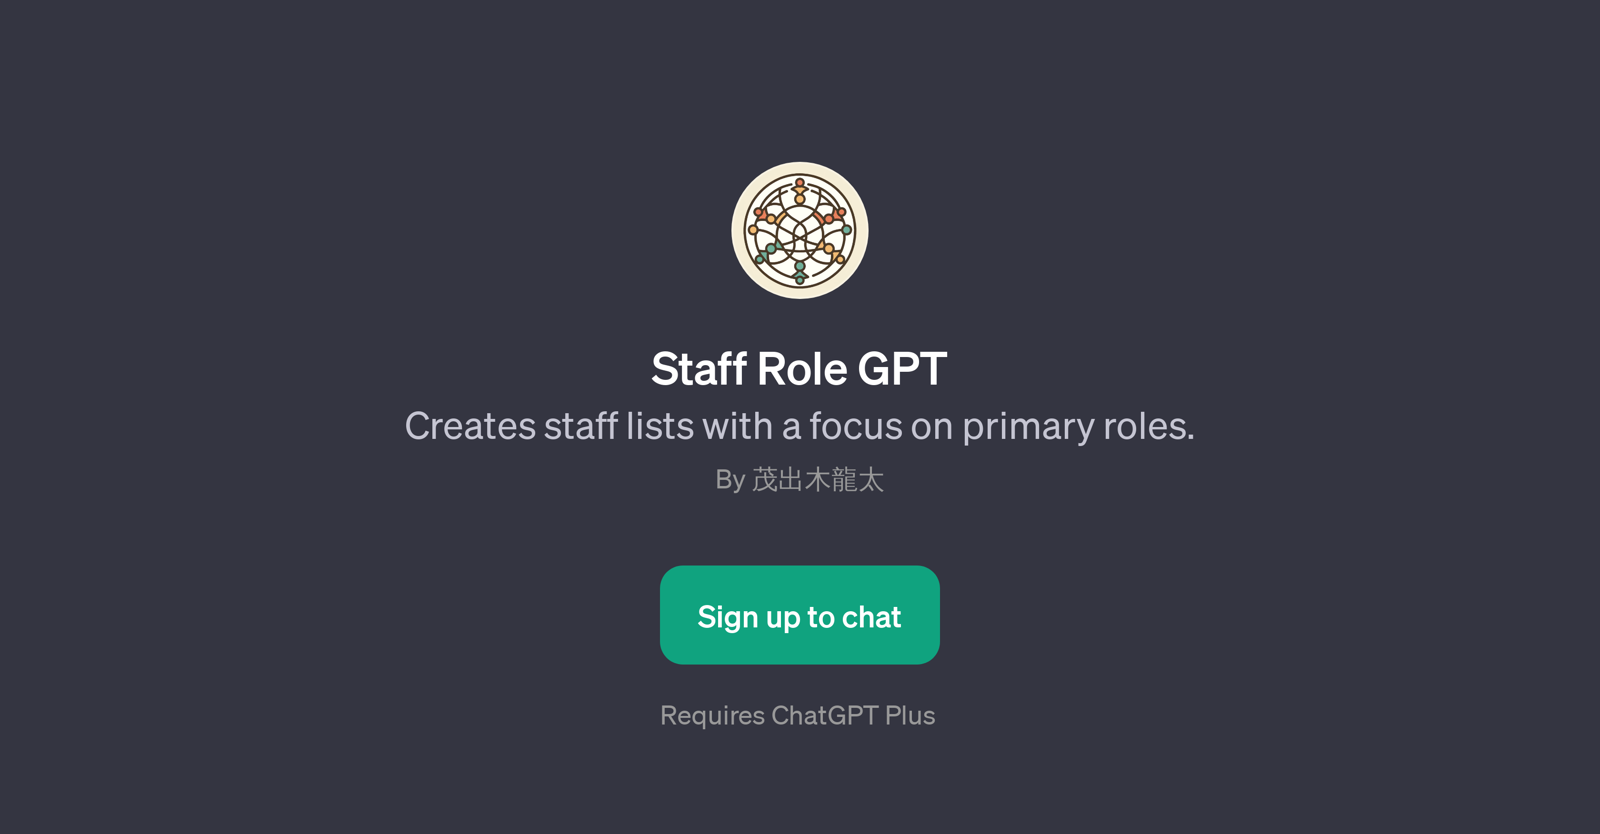 Staff Role GPT website